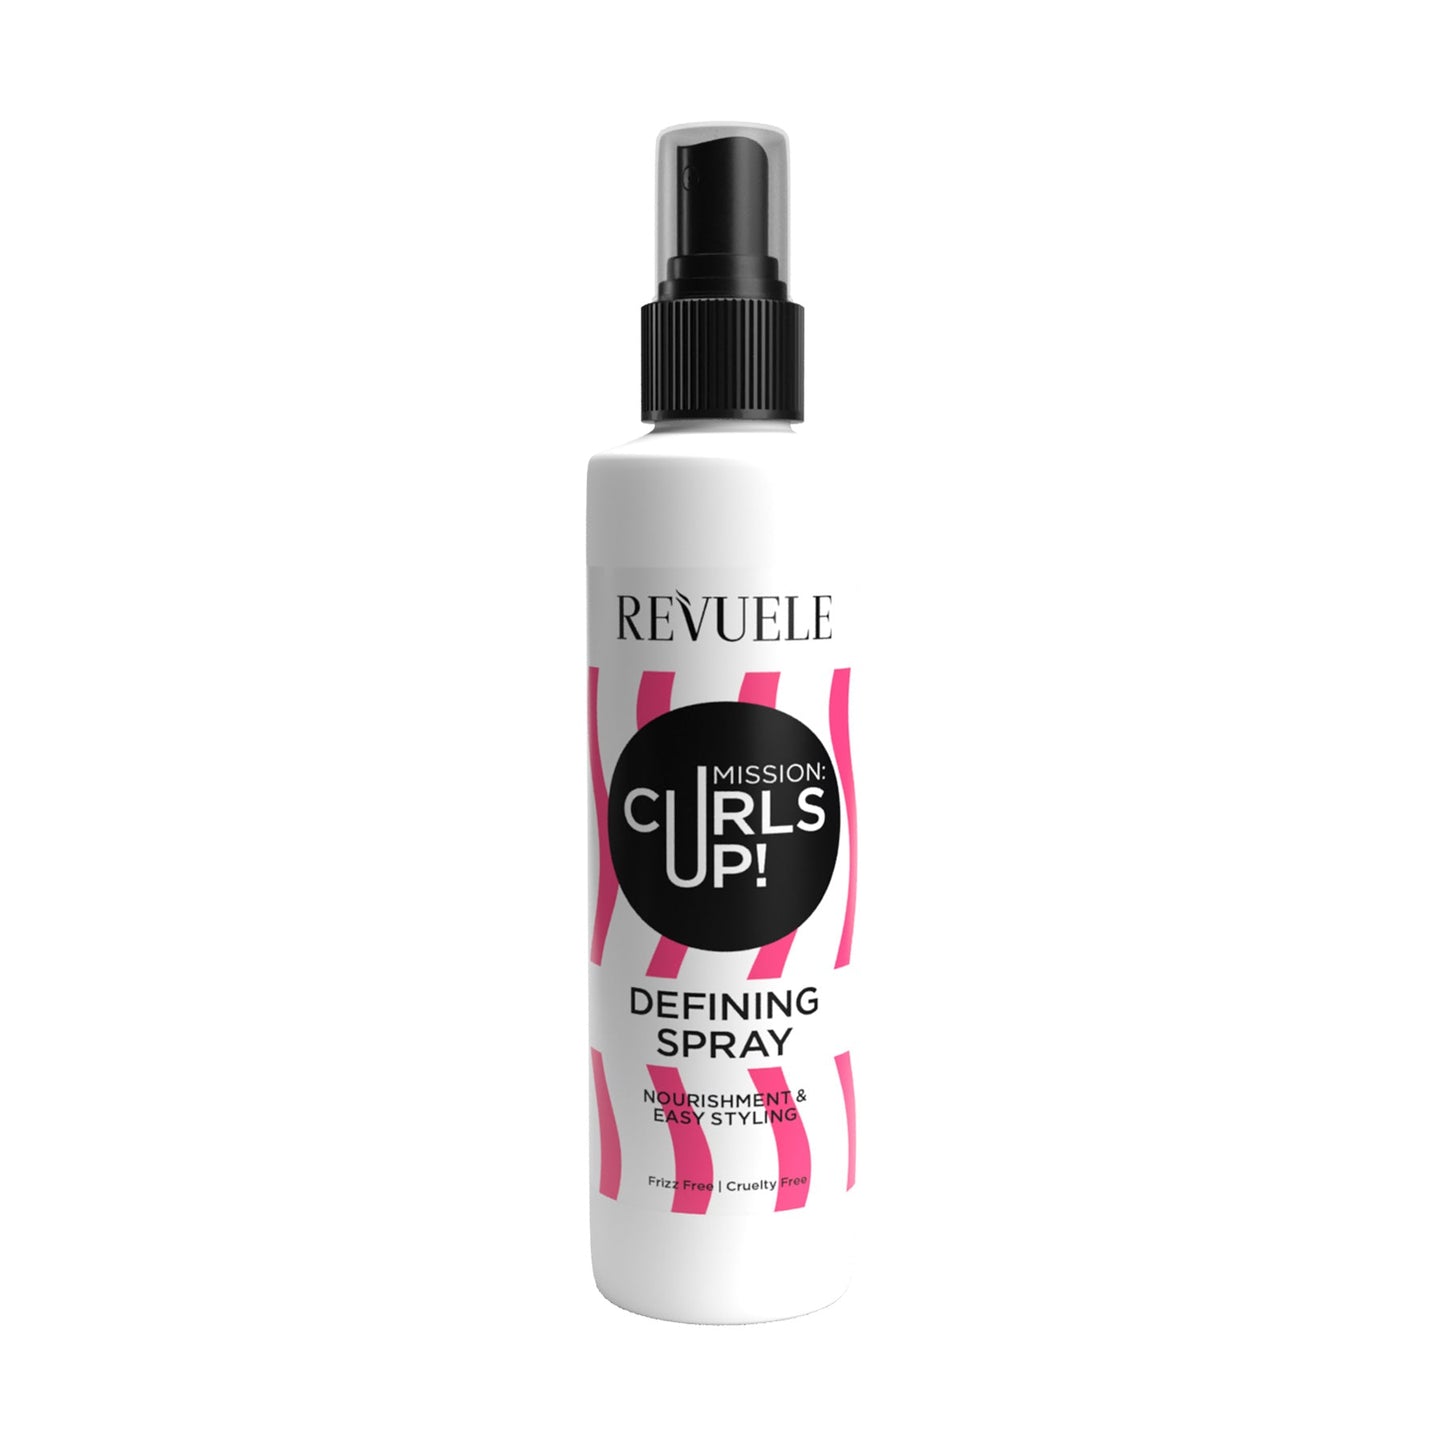 Revuele Mission: Curls up! Defining Spray